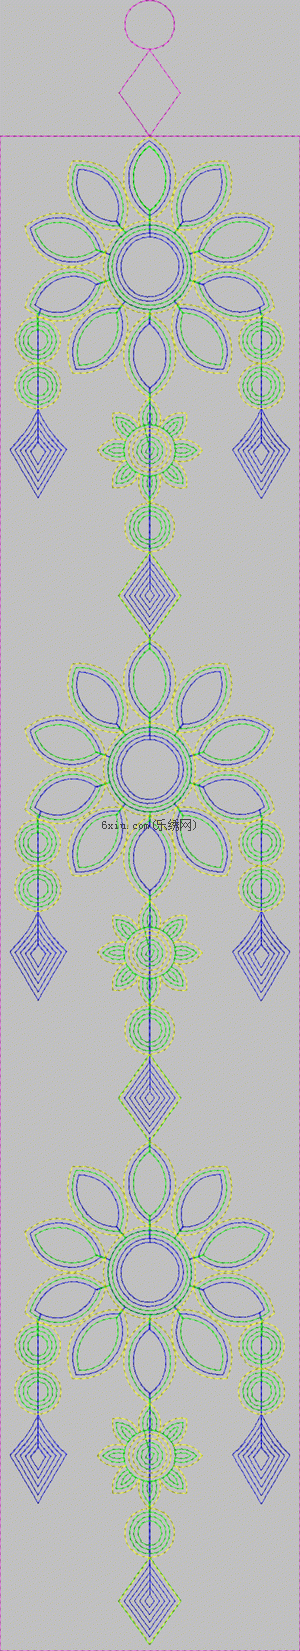 Geometry bar embroidery pattern album